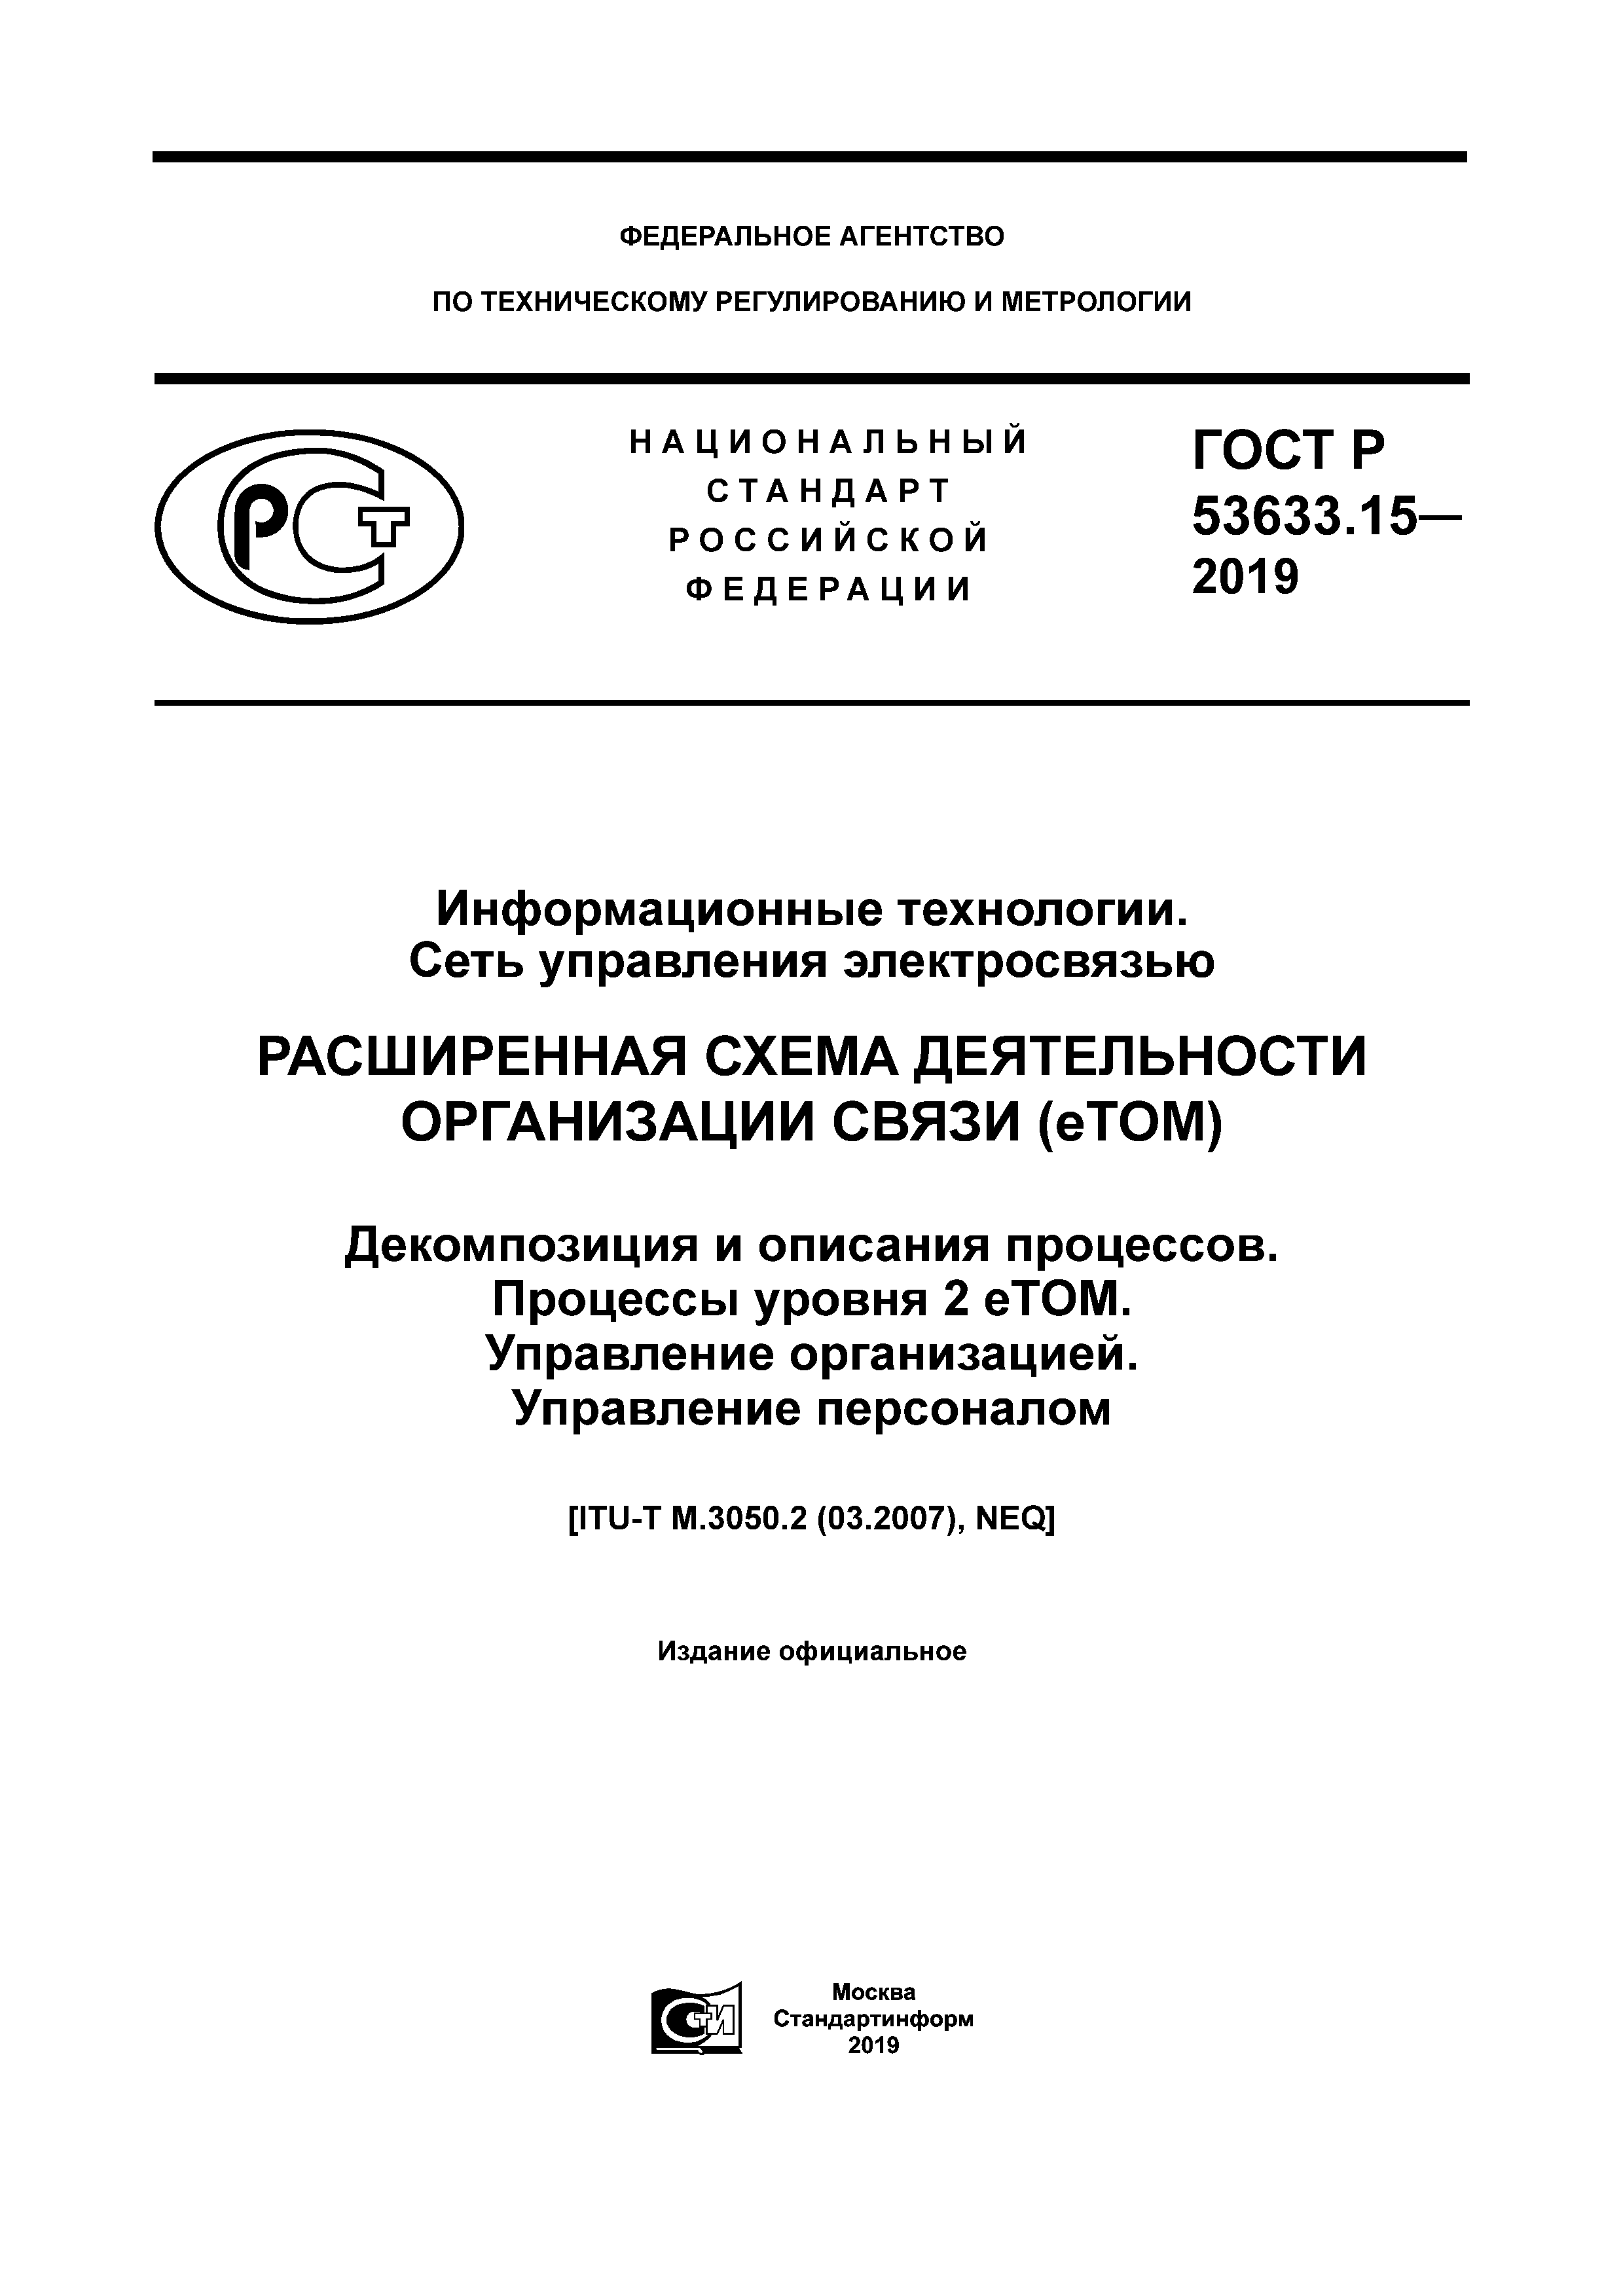 ГОСТ Р 53633.15-2019